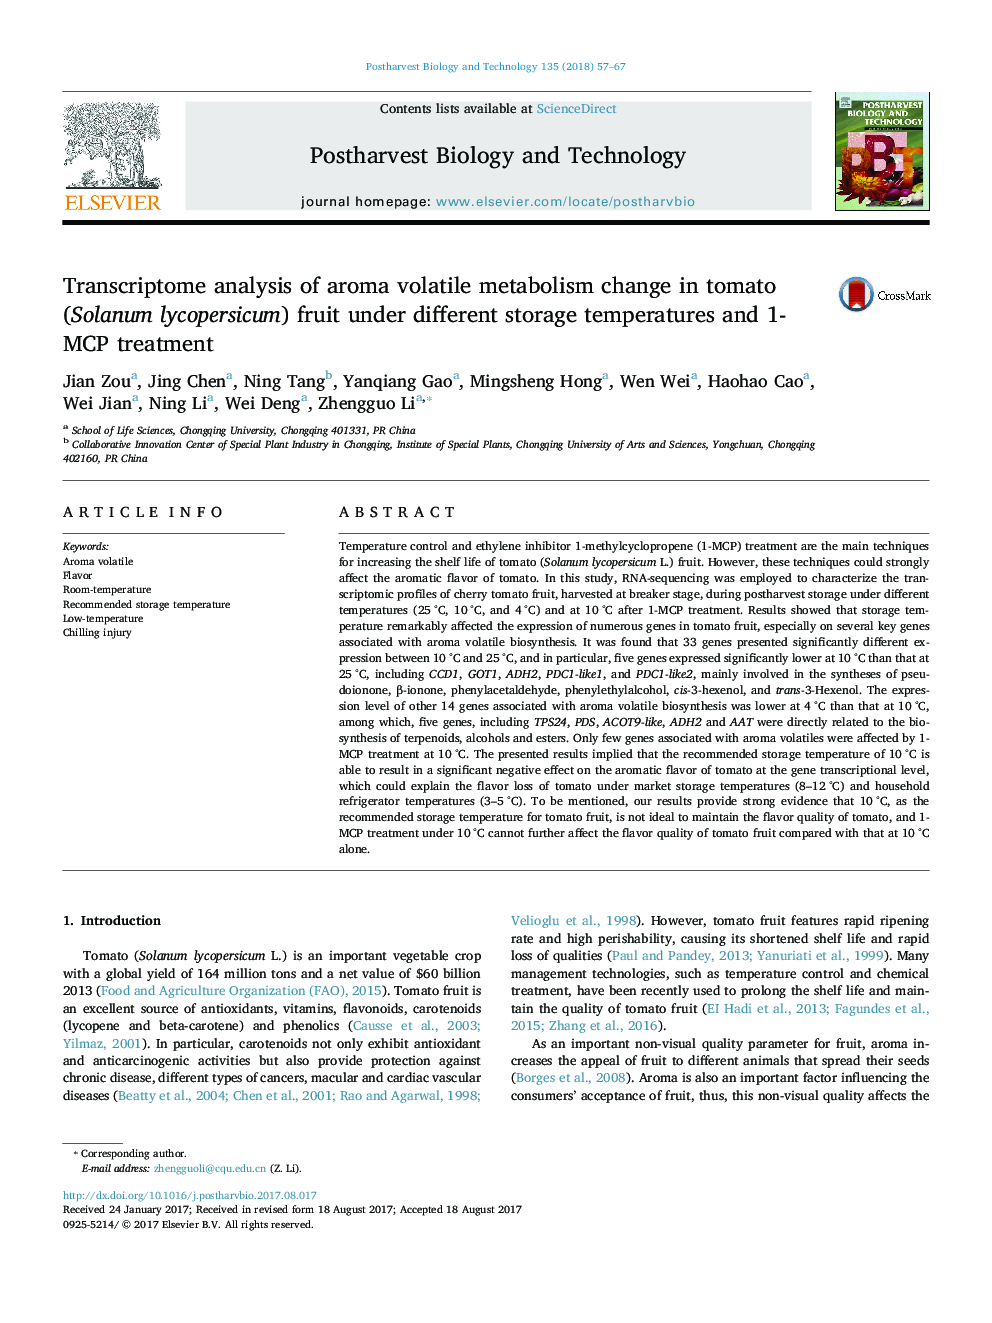 Transcriptome analysis of aroma volatile metabolism change in tomato (Solanum lycopersicum) fruit under different storage temperatures and 1-MCP treatment